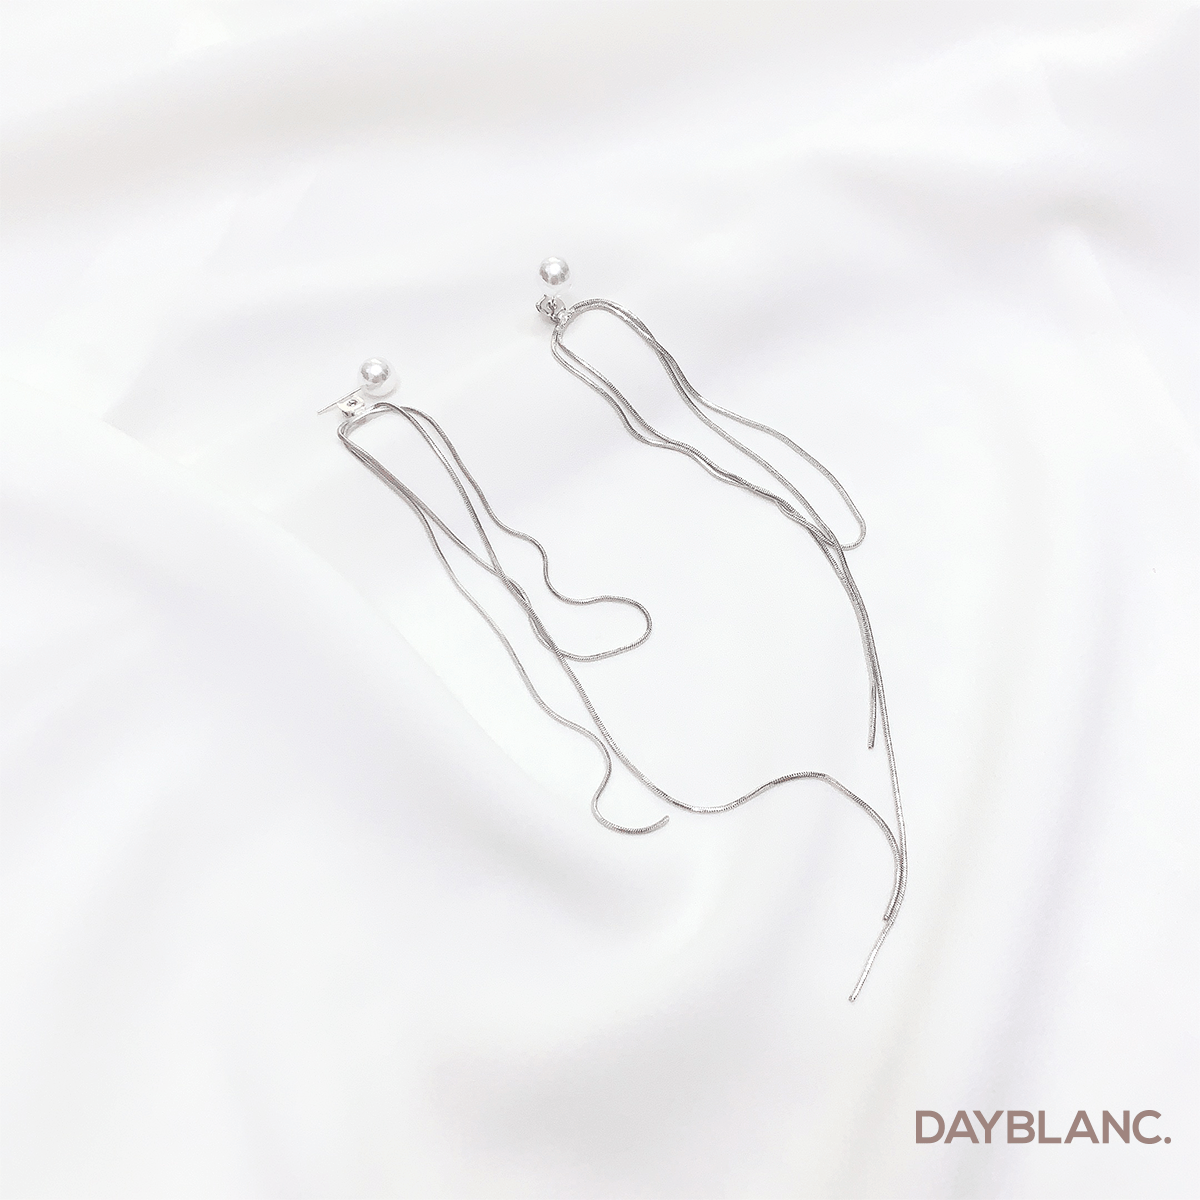 Moonlight Chain (Earring) - DAYBLANC